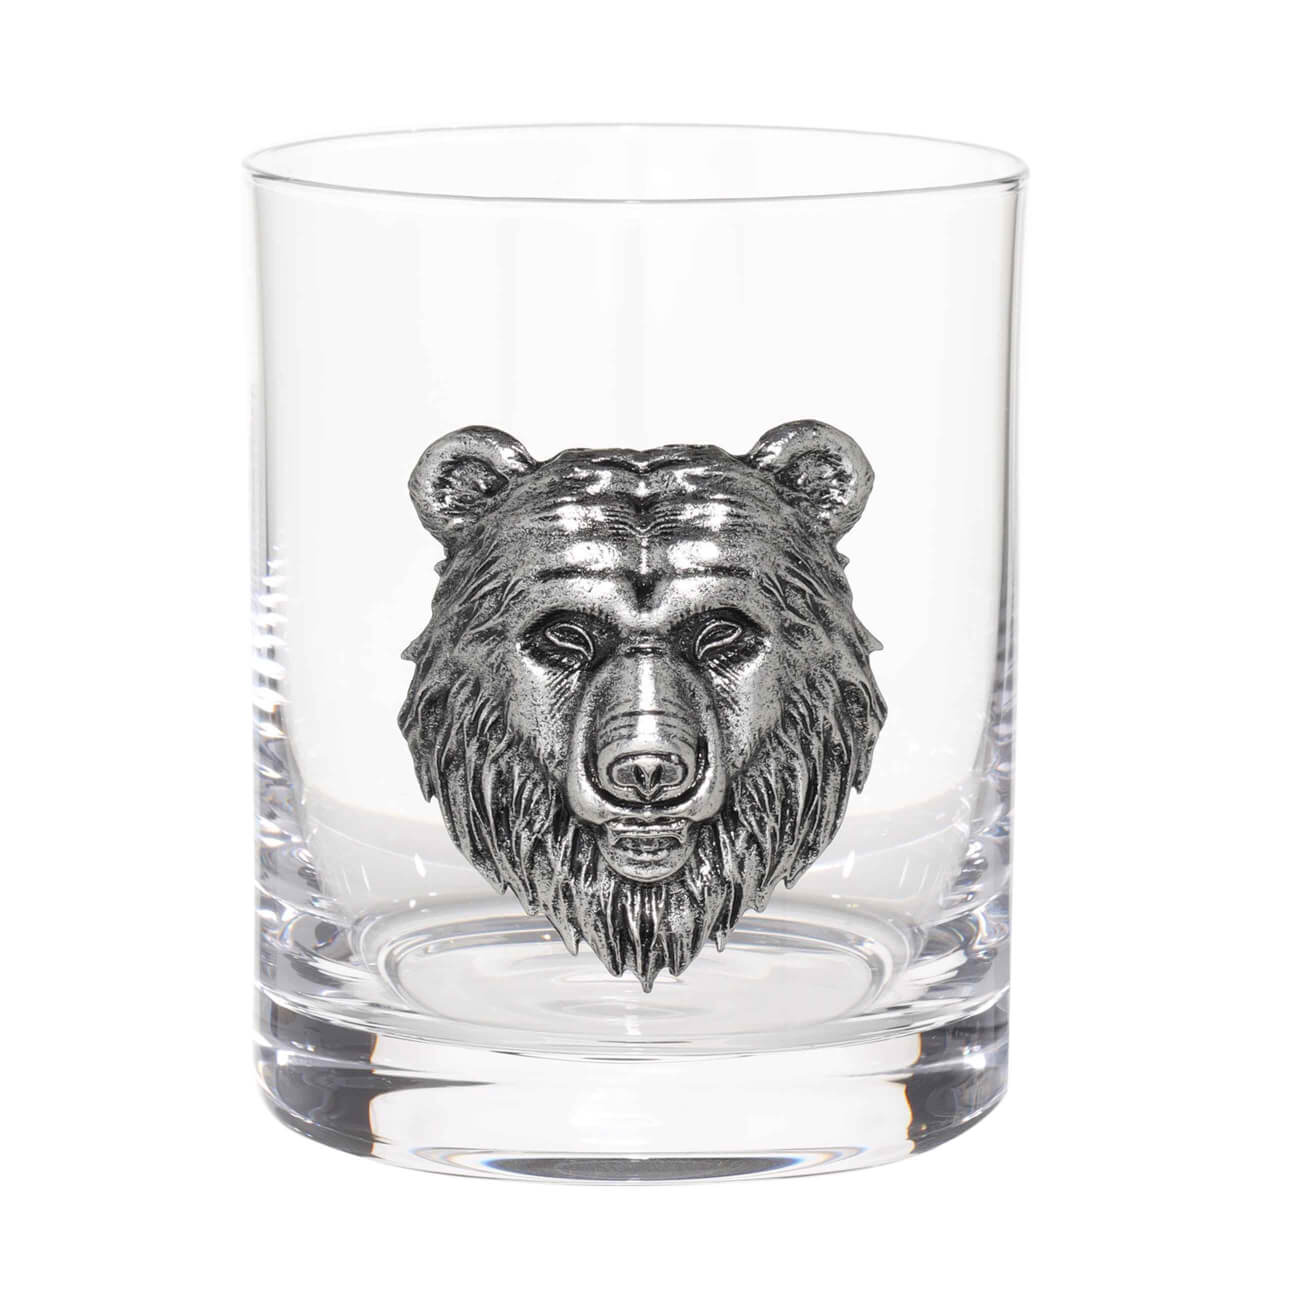 Стакан для виски, 340 мл, стекло/металл, серебристый, Медведь, Lux elements elements бокалы для виски 2 шт